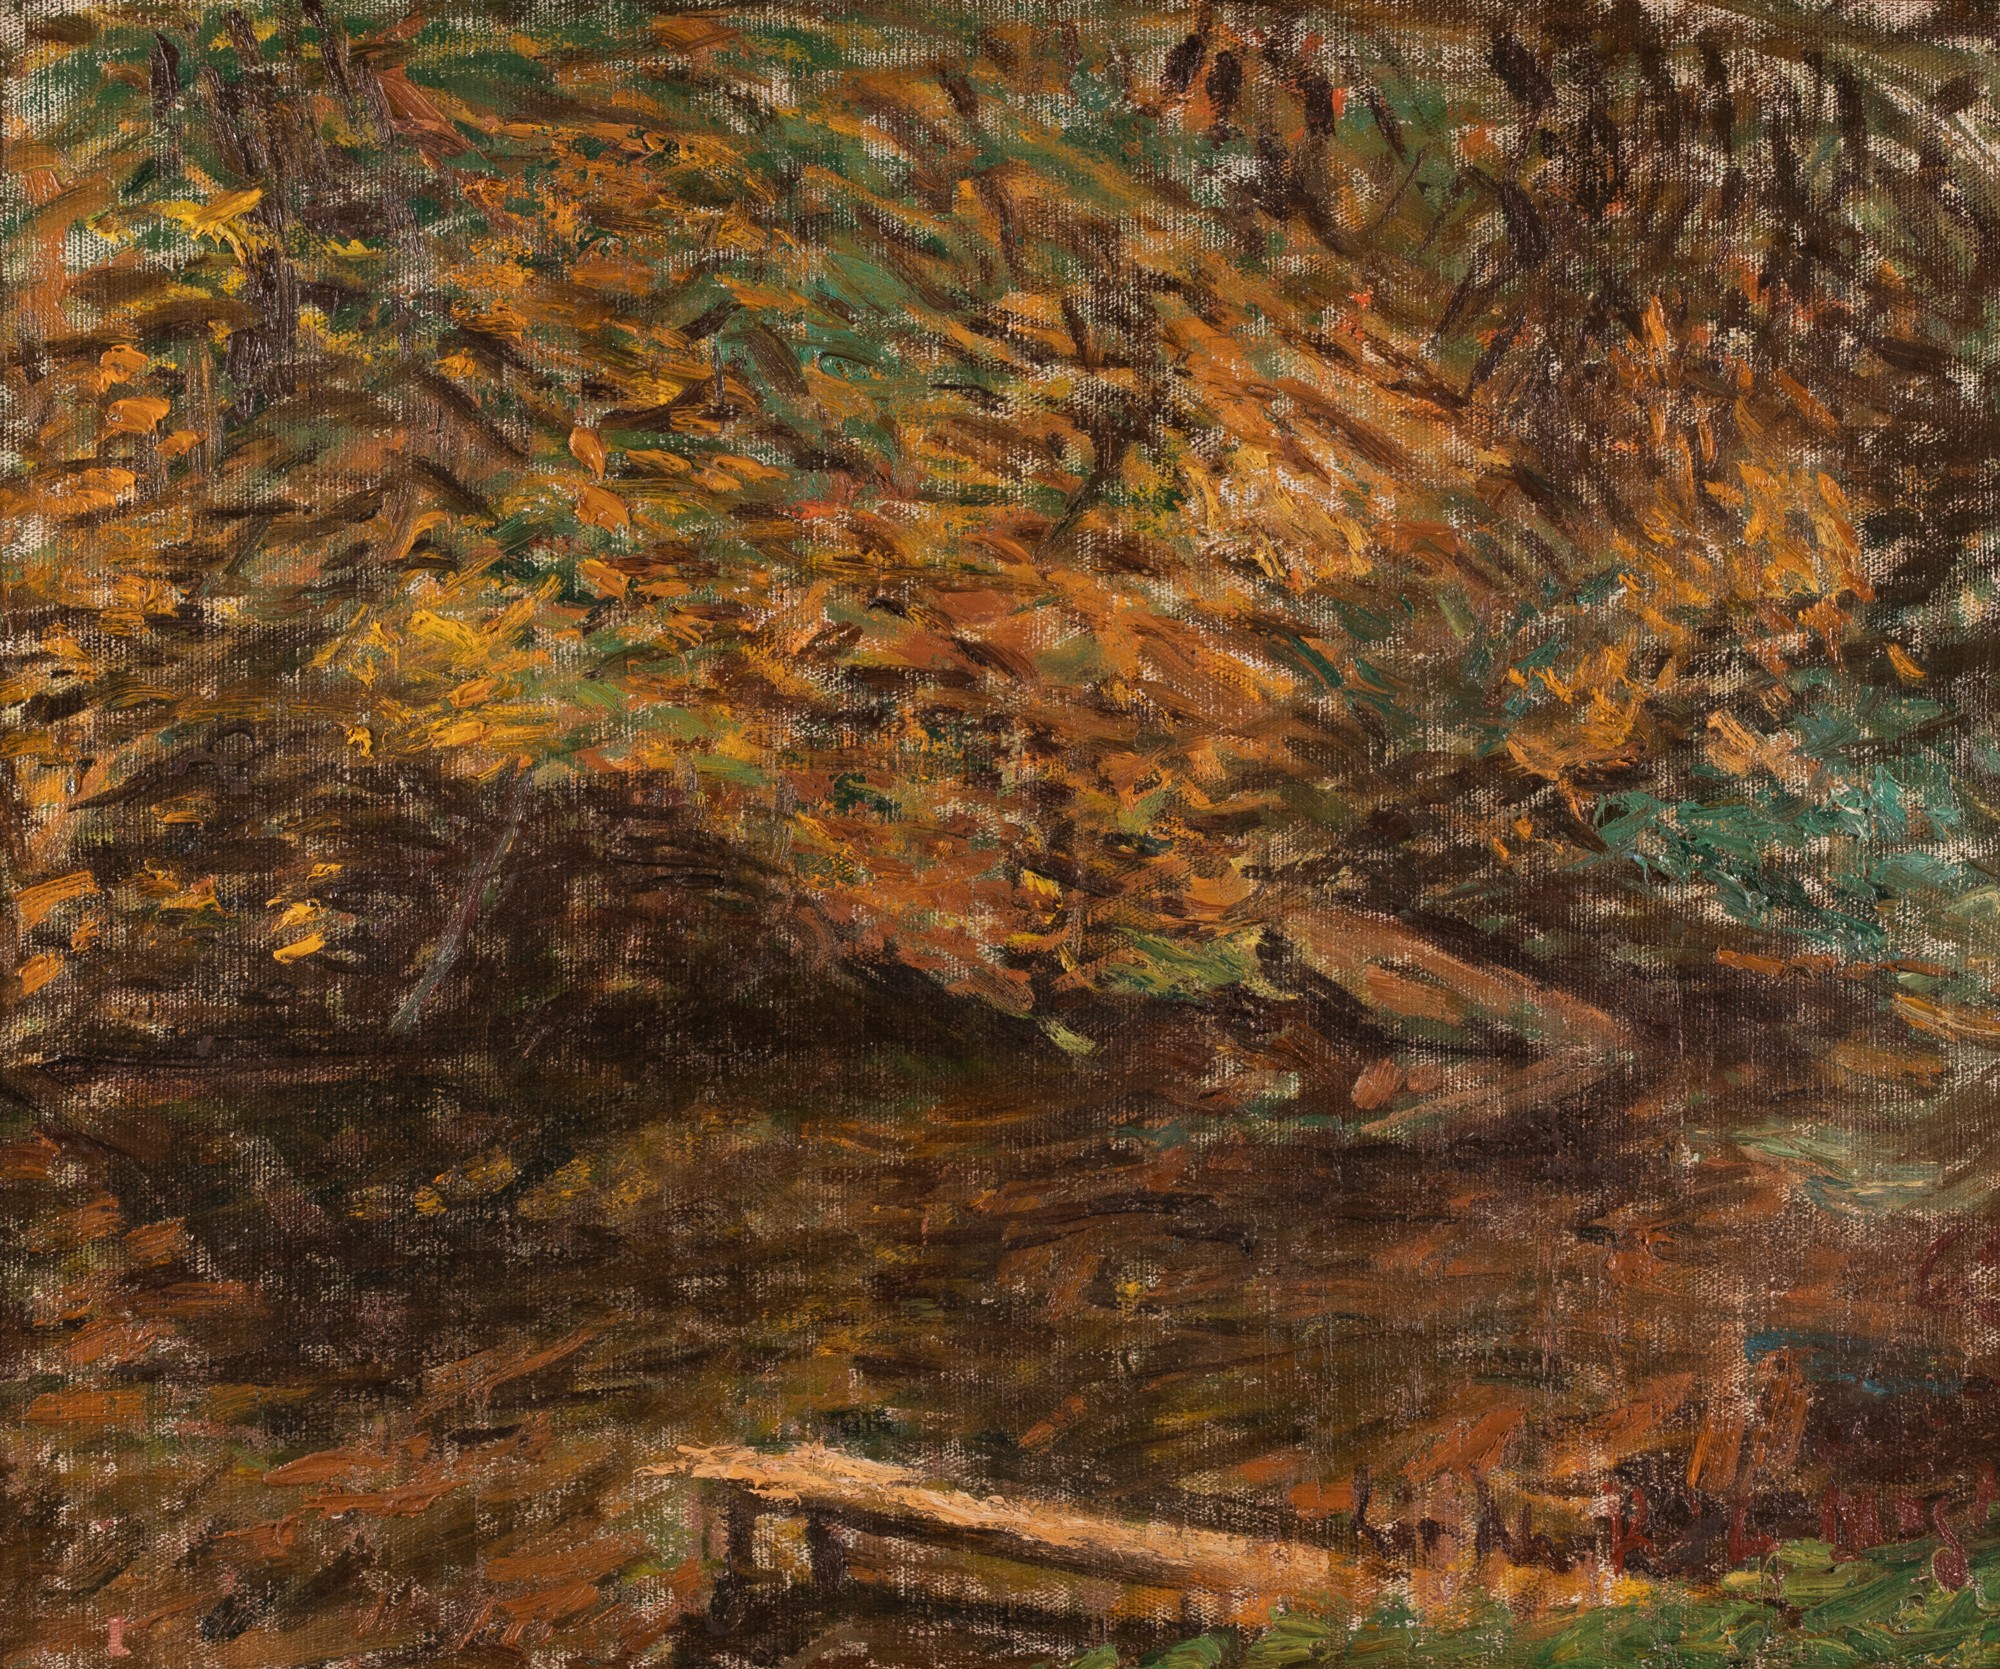 Linda Kits-Mägi "Autumnal Landscape With a River"